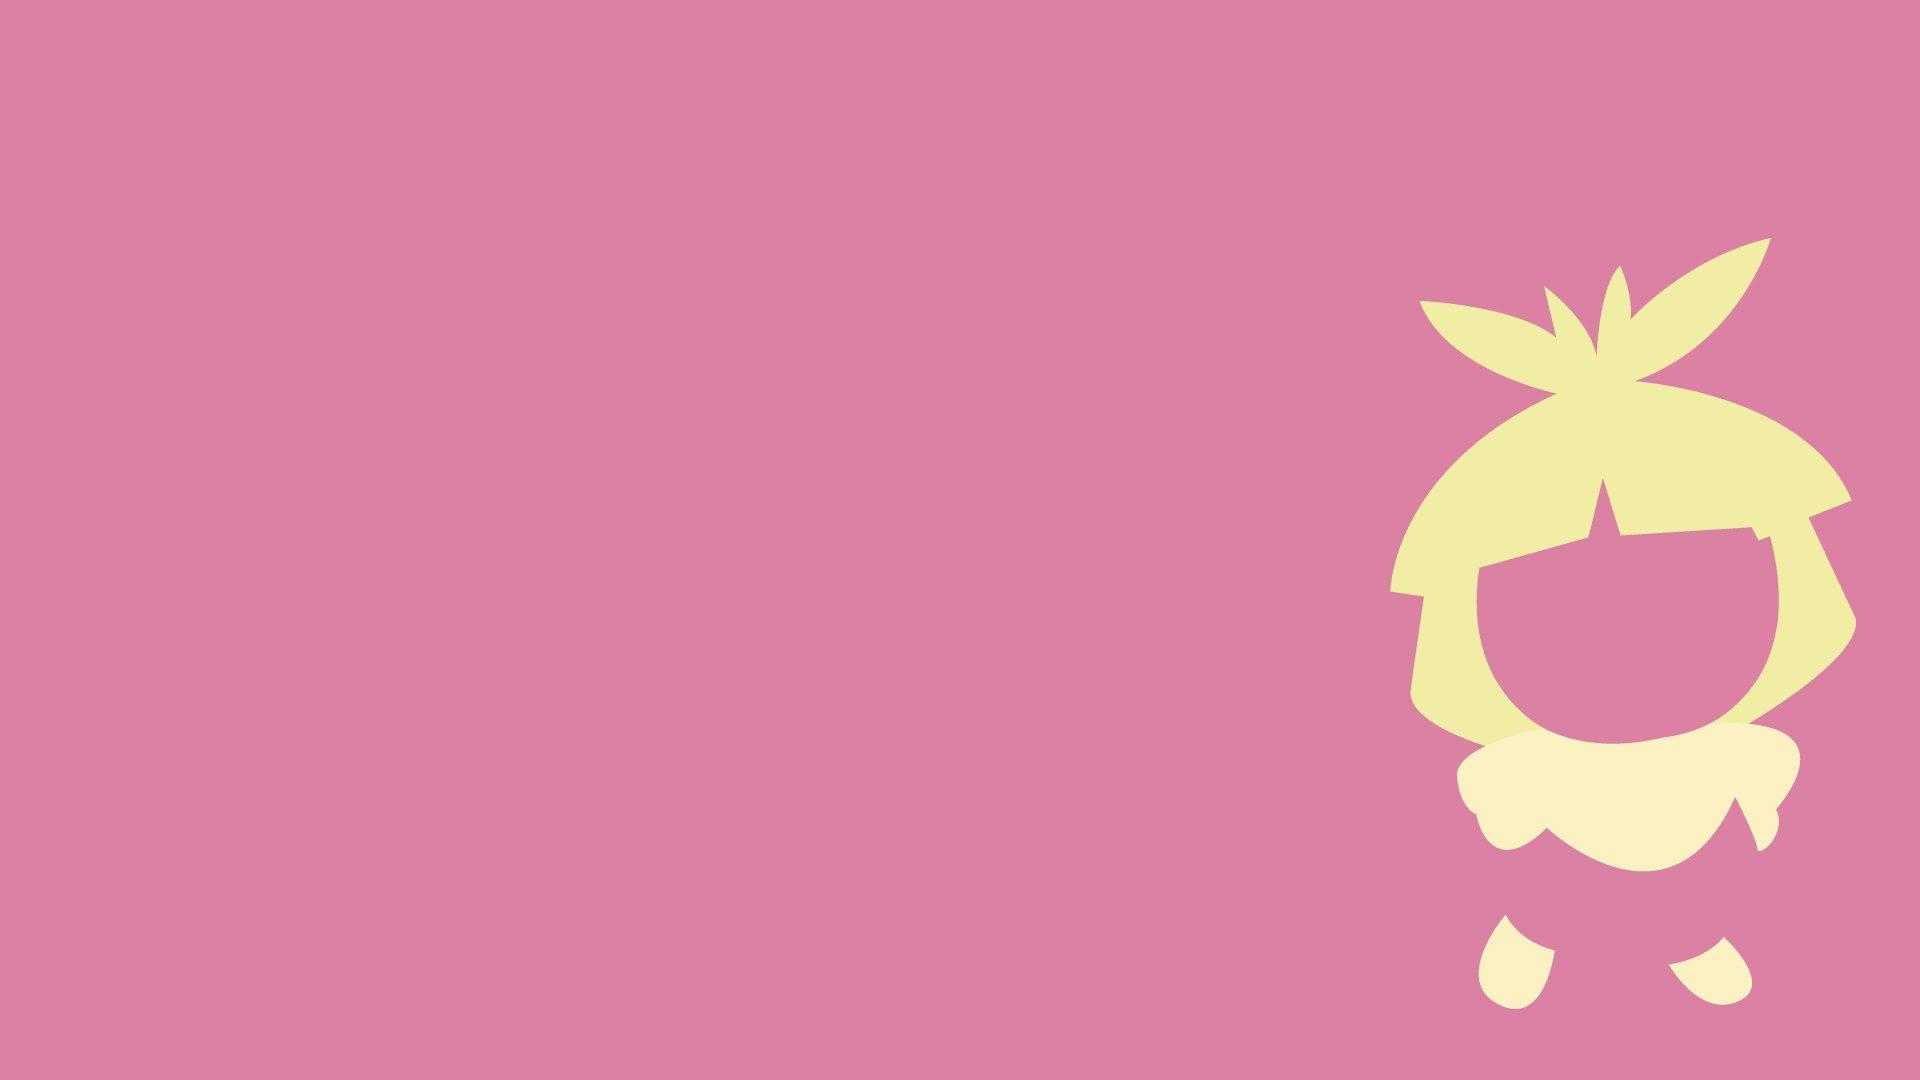 Smoochum (Pokémon) HD Wallpaper and Background Image